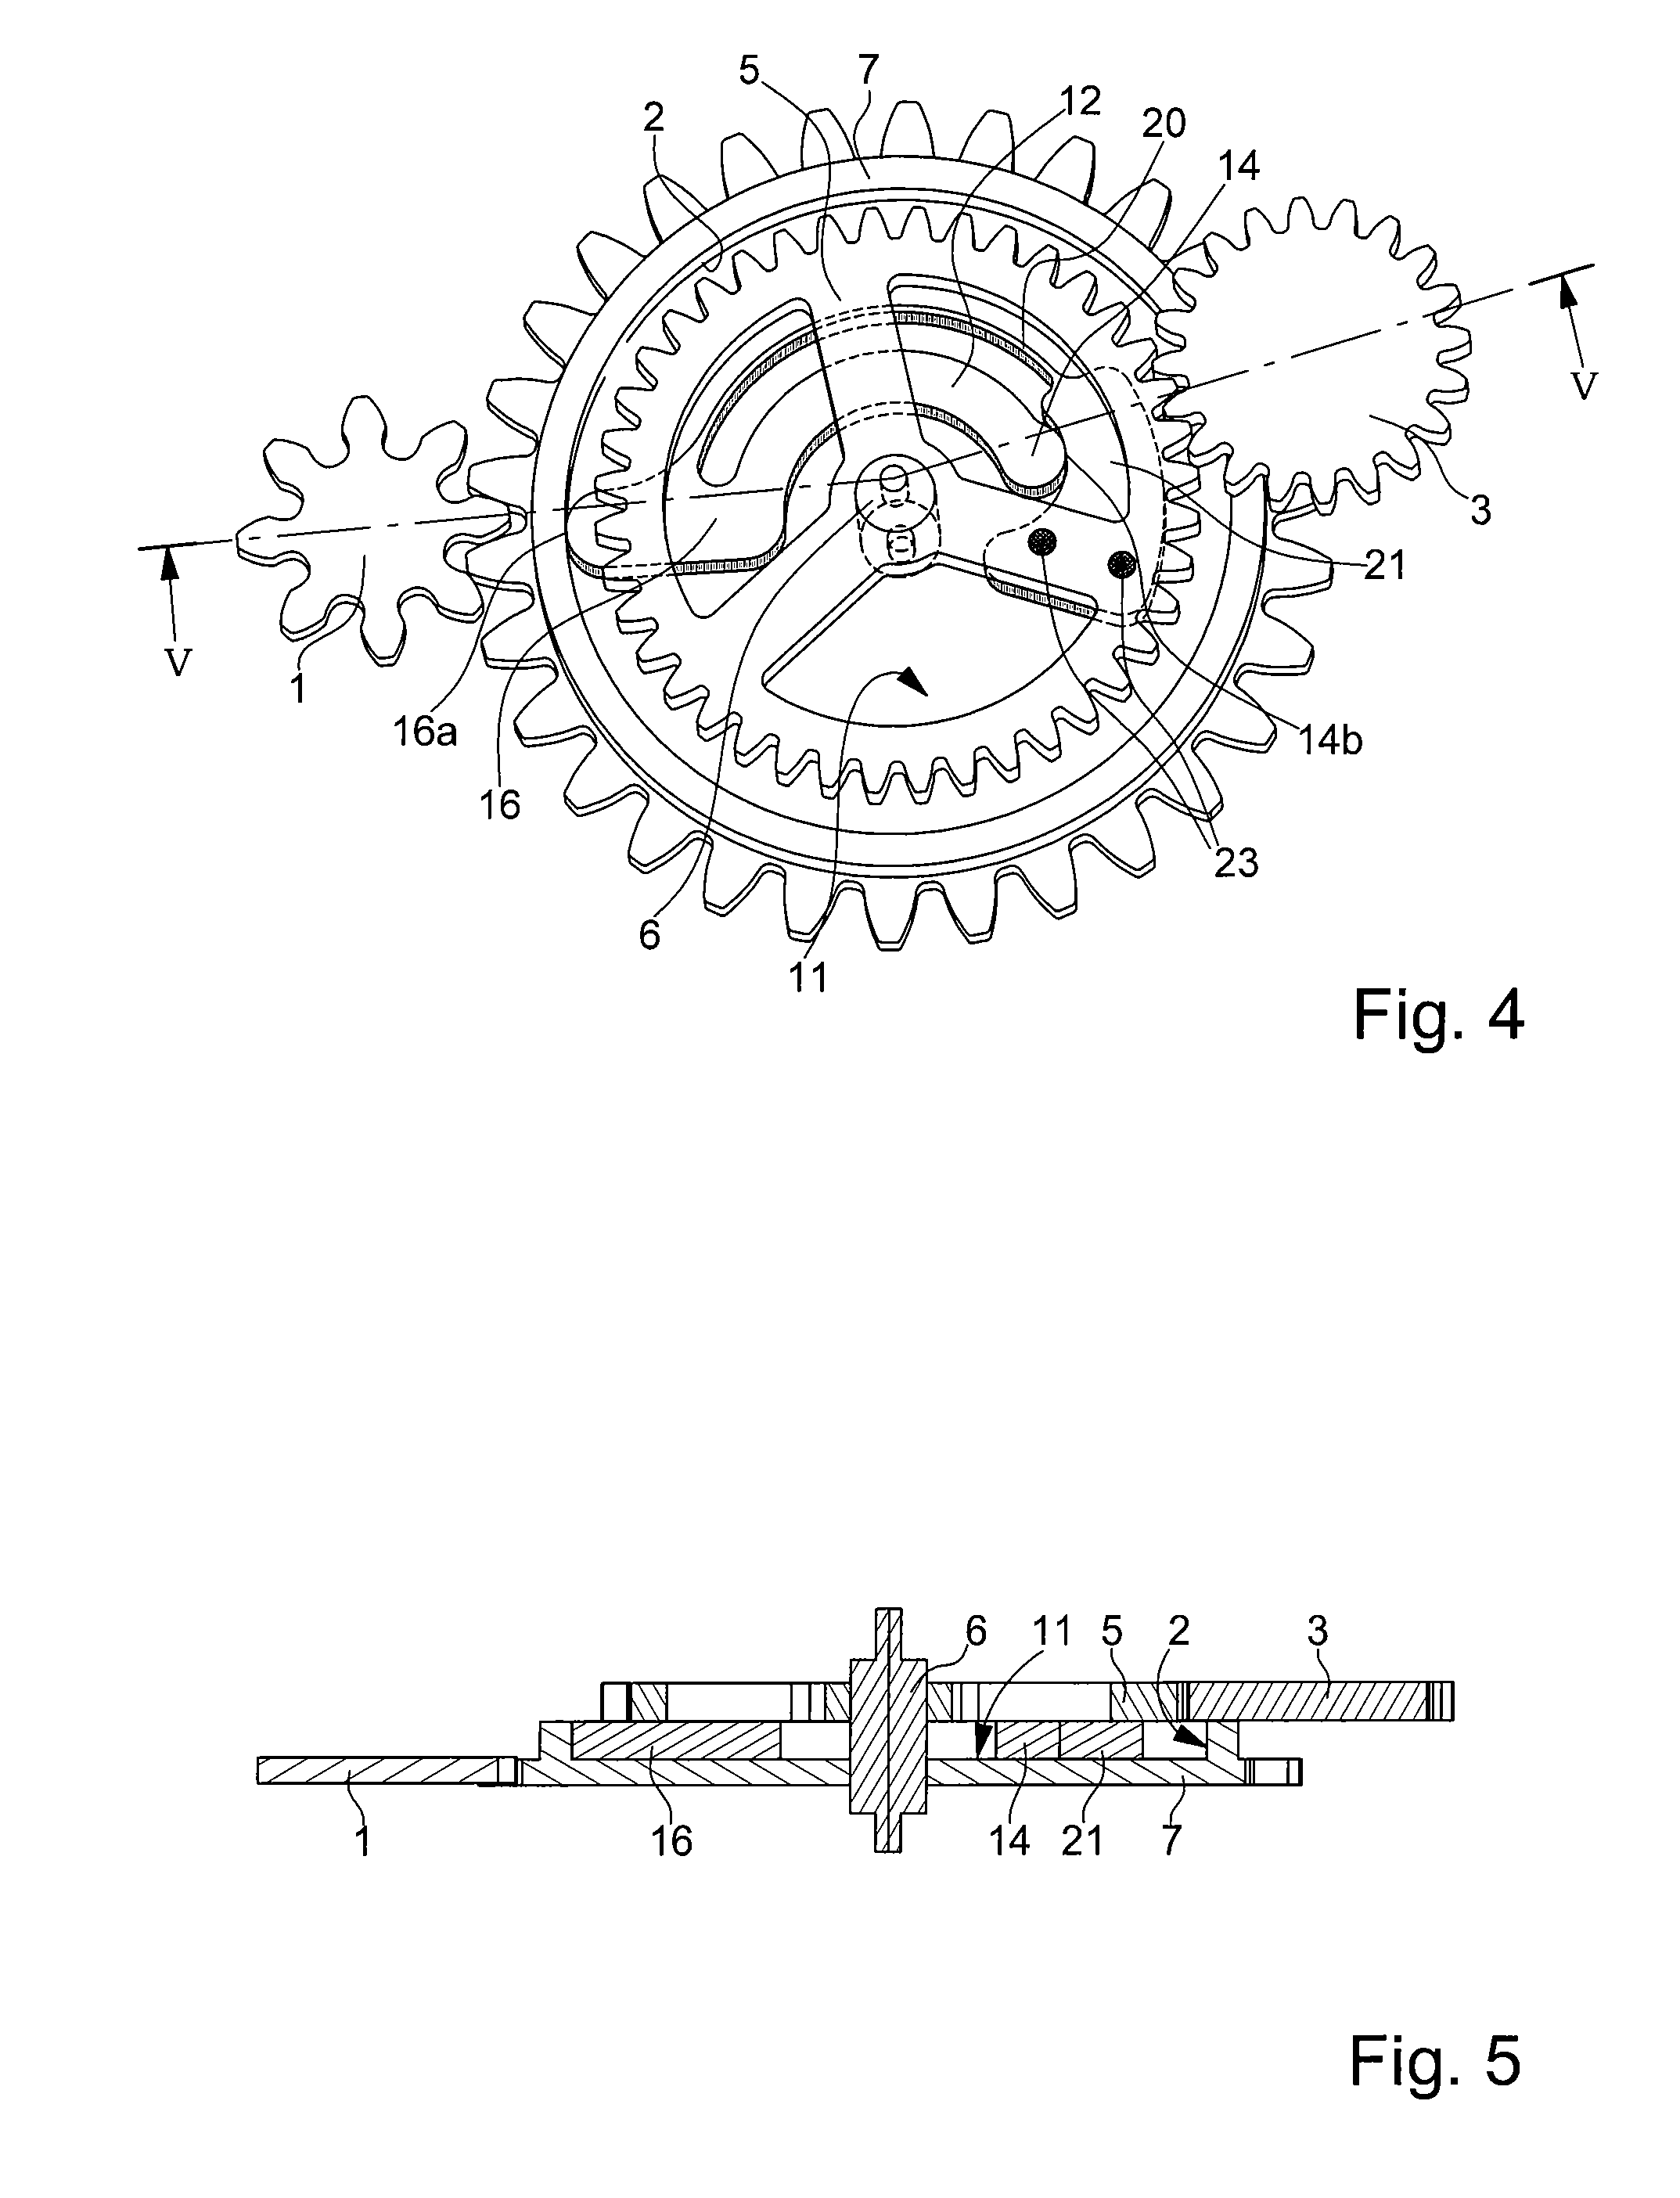 Reverser mechanism for uni-directional rotational driving of a wheel set